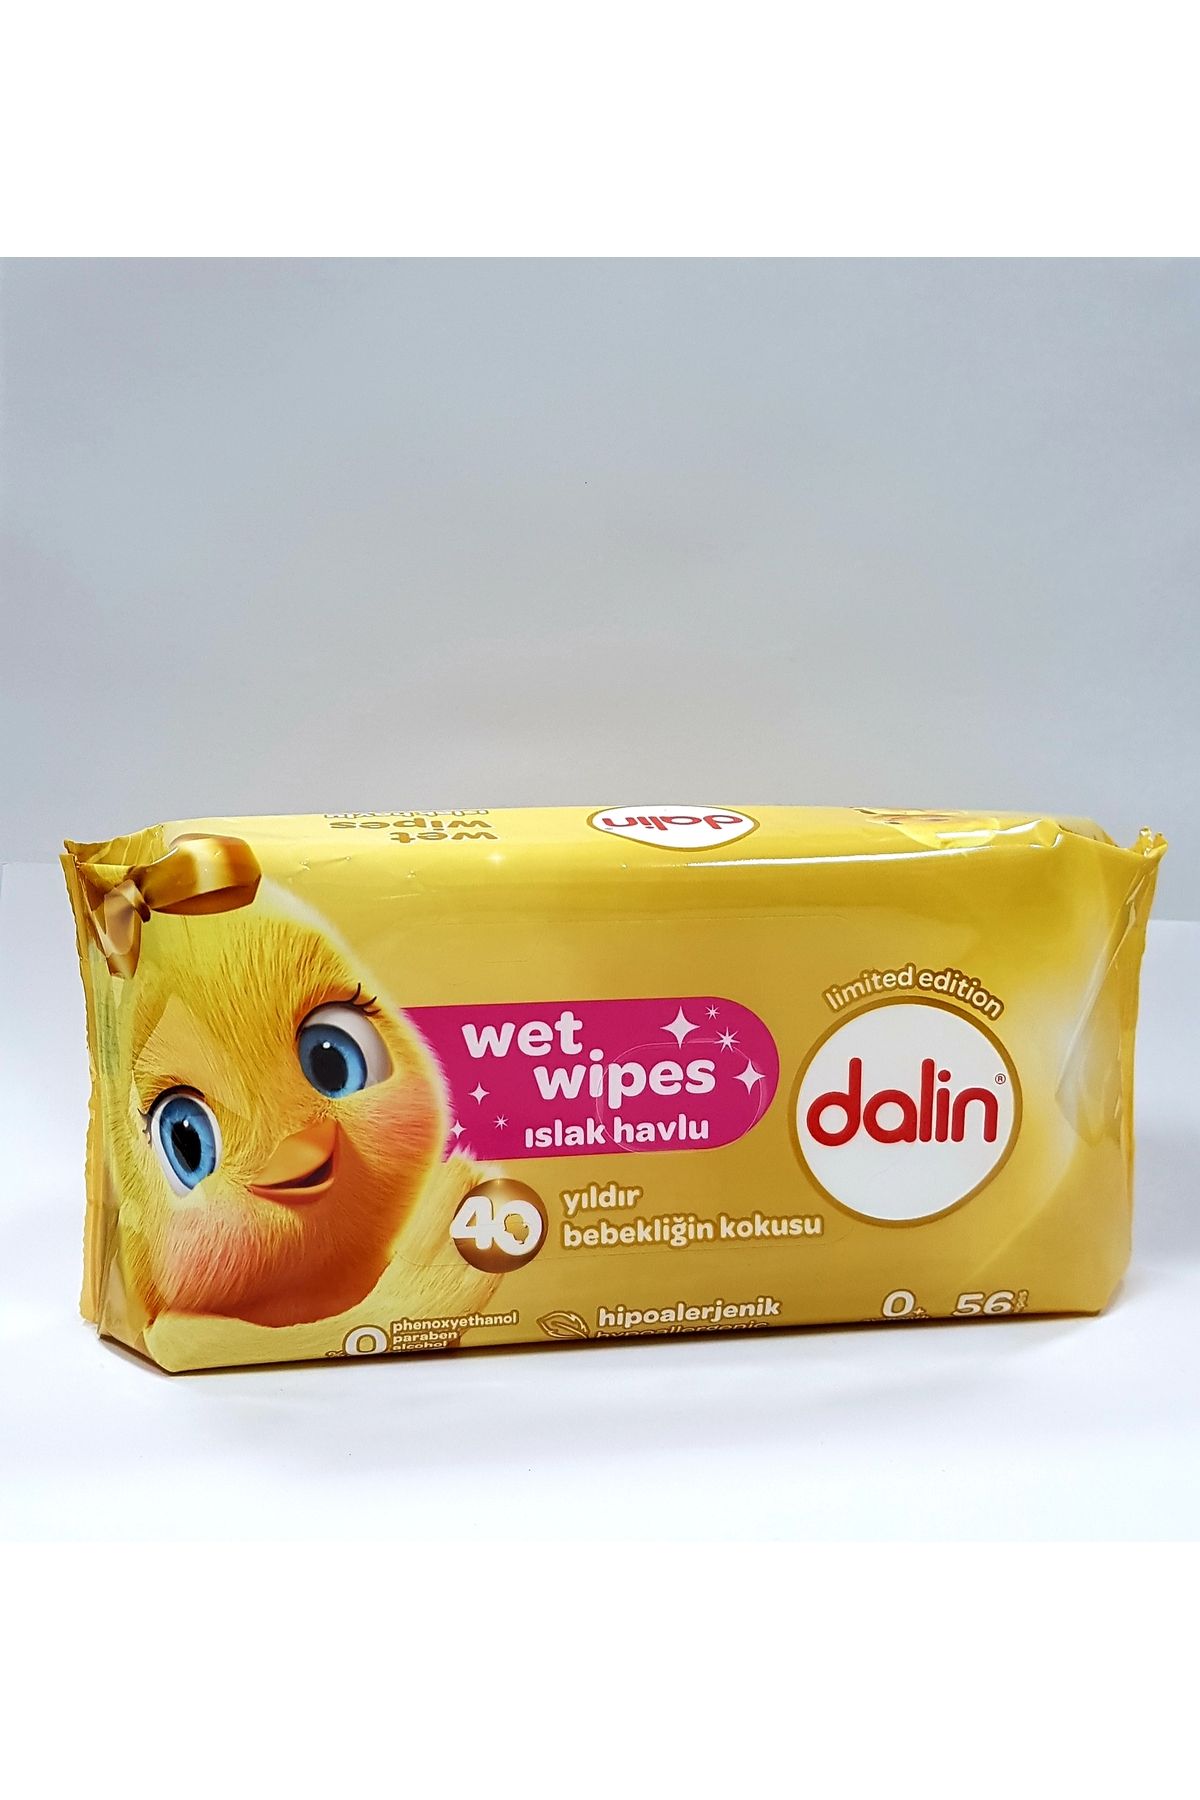 Dalin Wet Wipes Islak Havlu 56 Yaprak(Limited Edition)